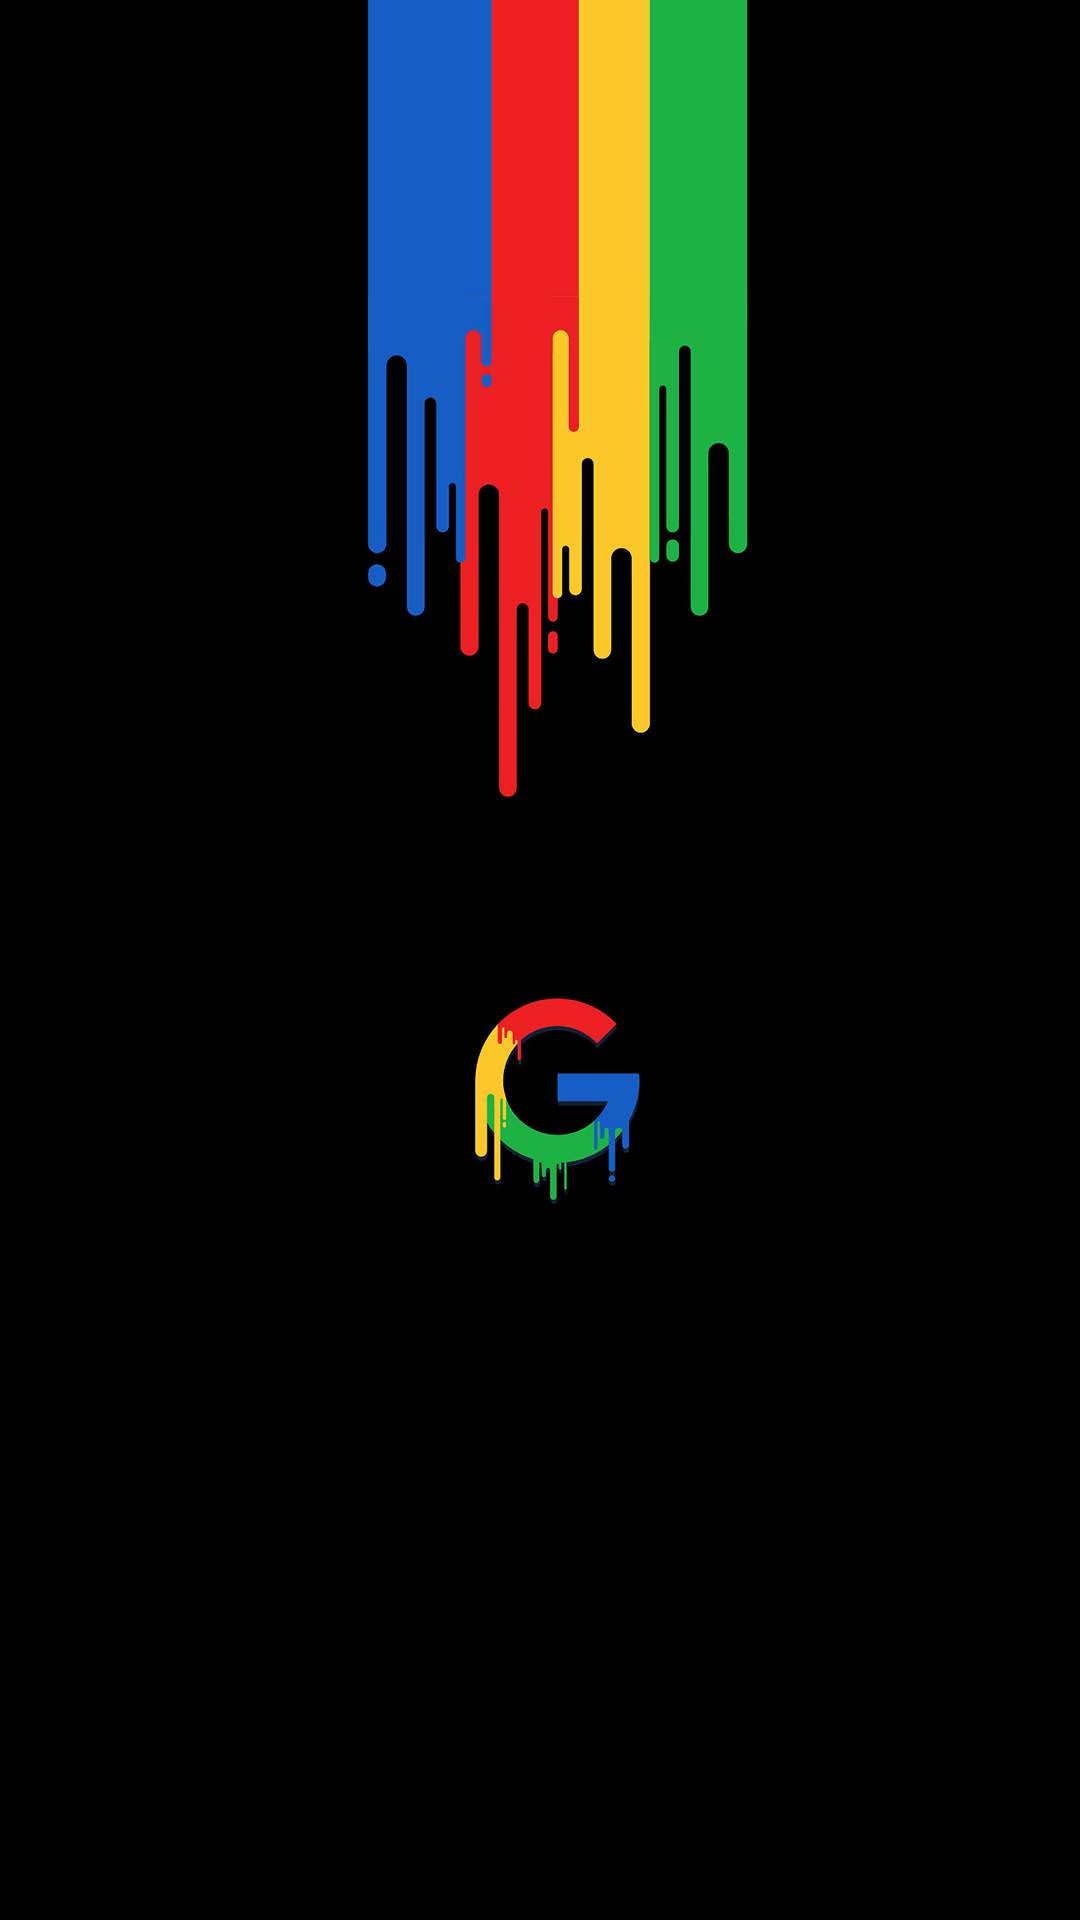 Google Pixel 2 XL wallpaper